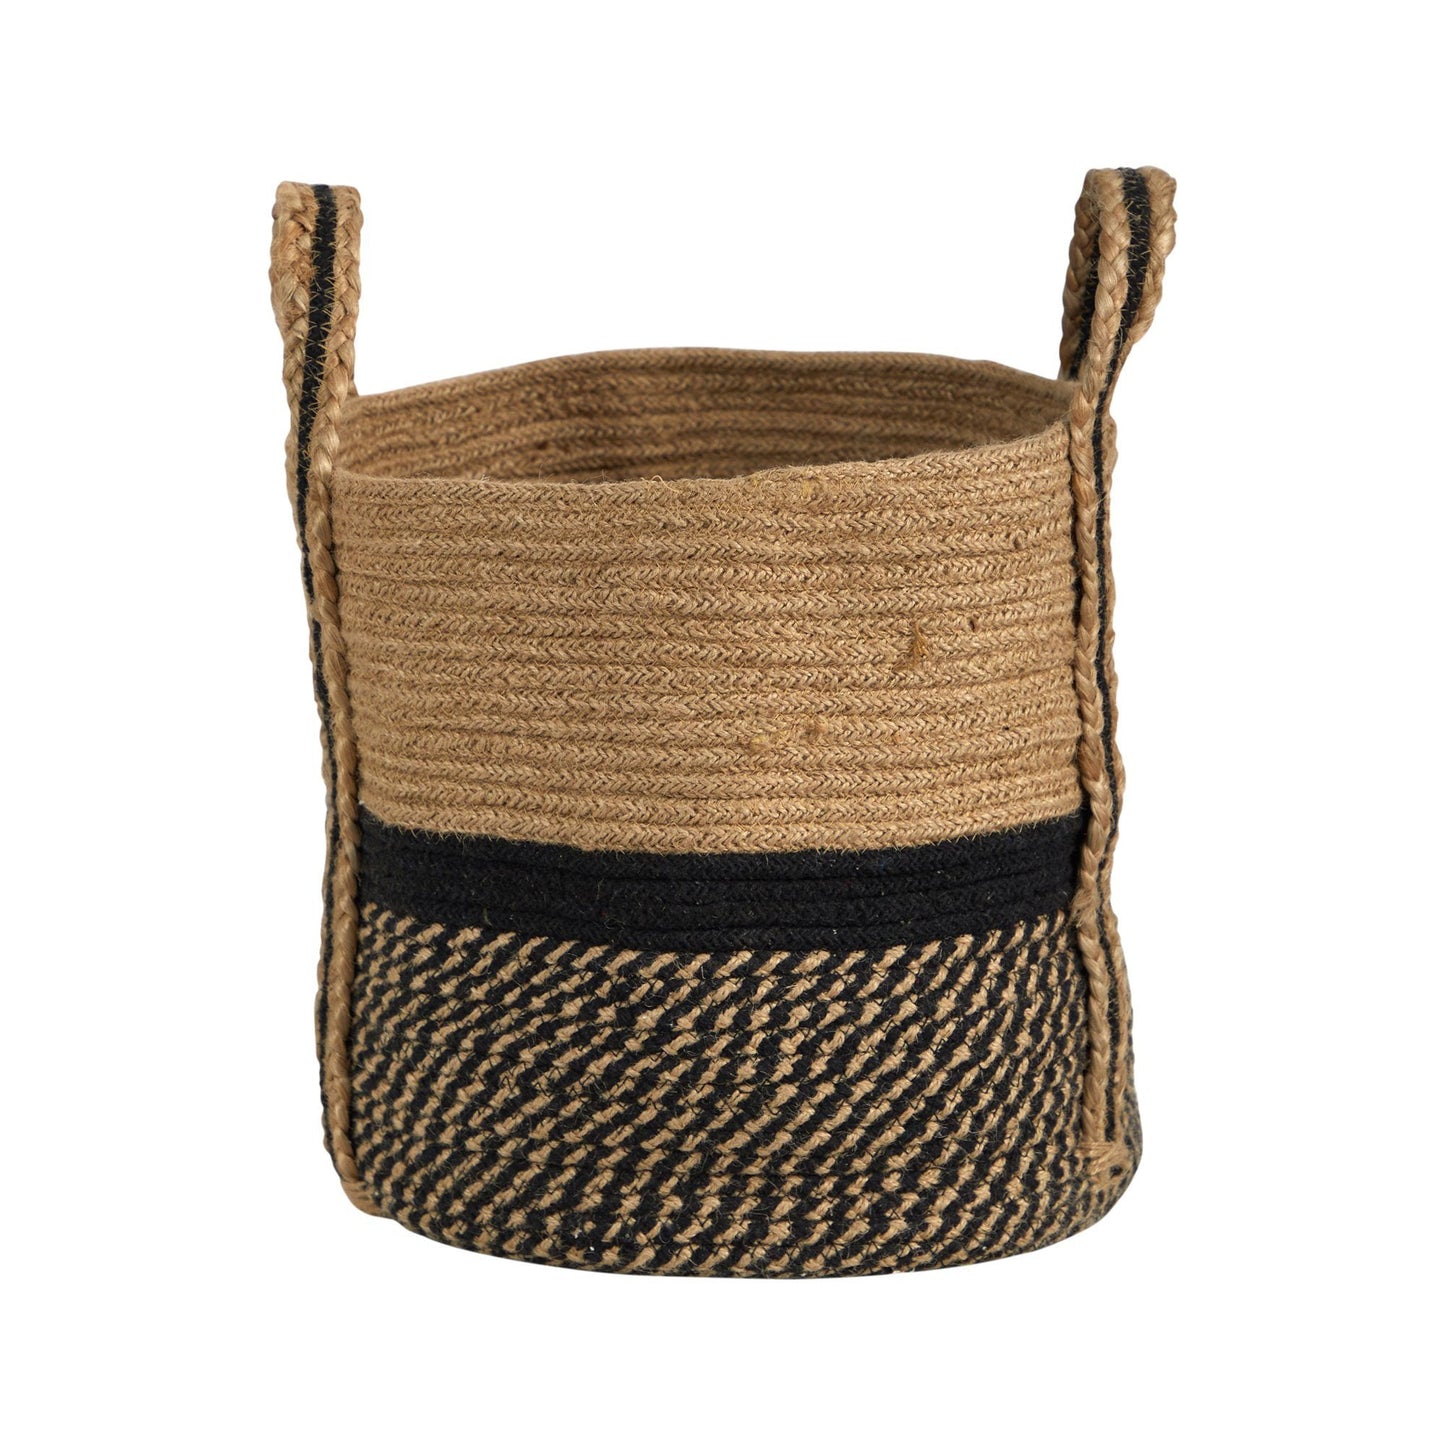 13" Boho Chic Basket Natural Jute Basket Planter, Black Bottom Natural Top with Handles" by Nearly Natural